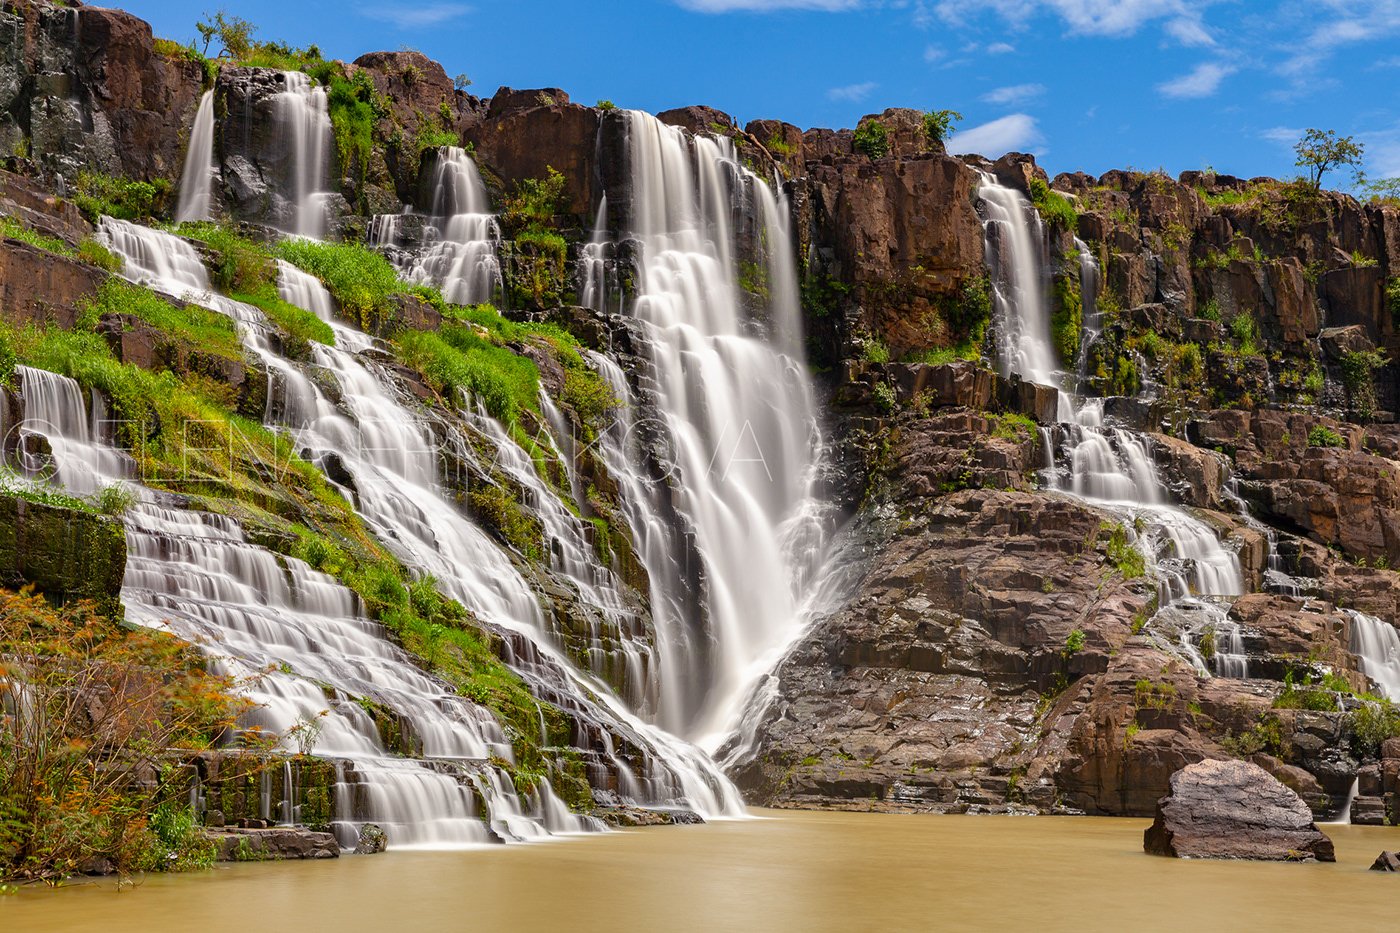 Pongour waterfalls located near Dalat, Vietnam